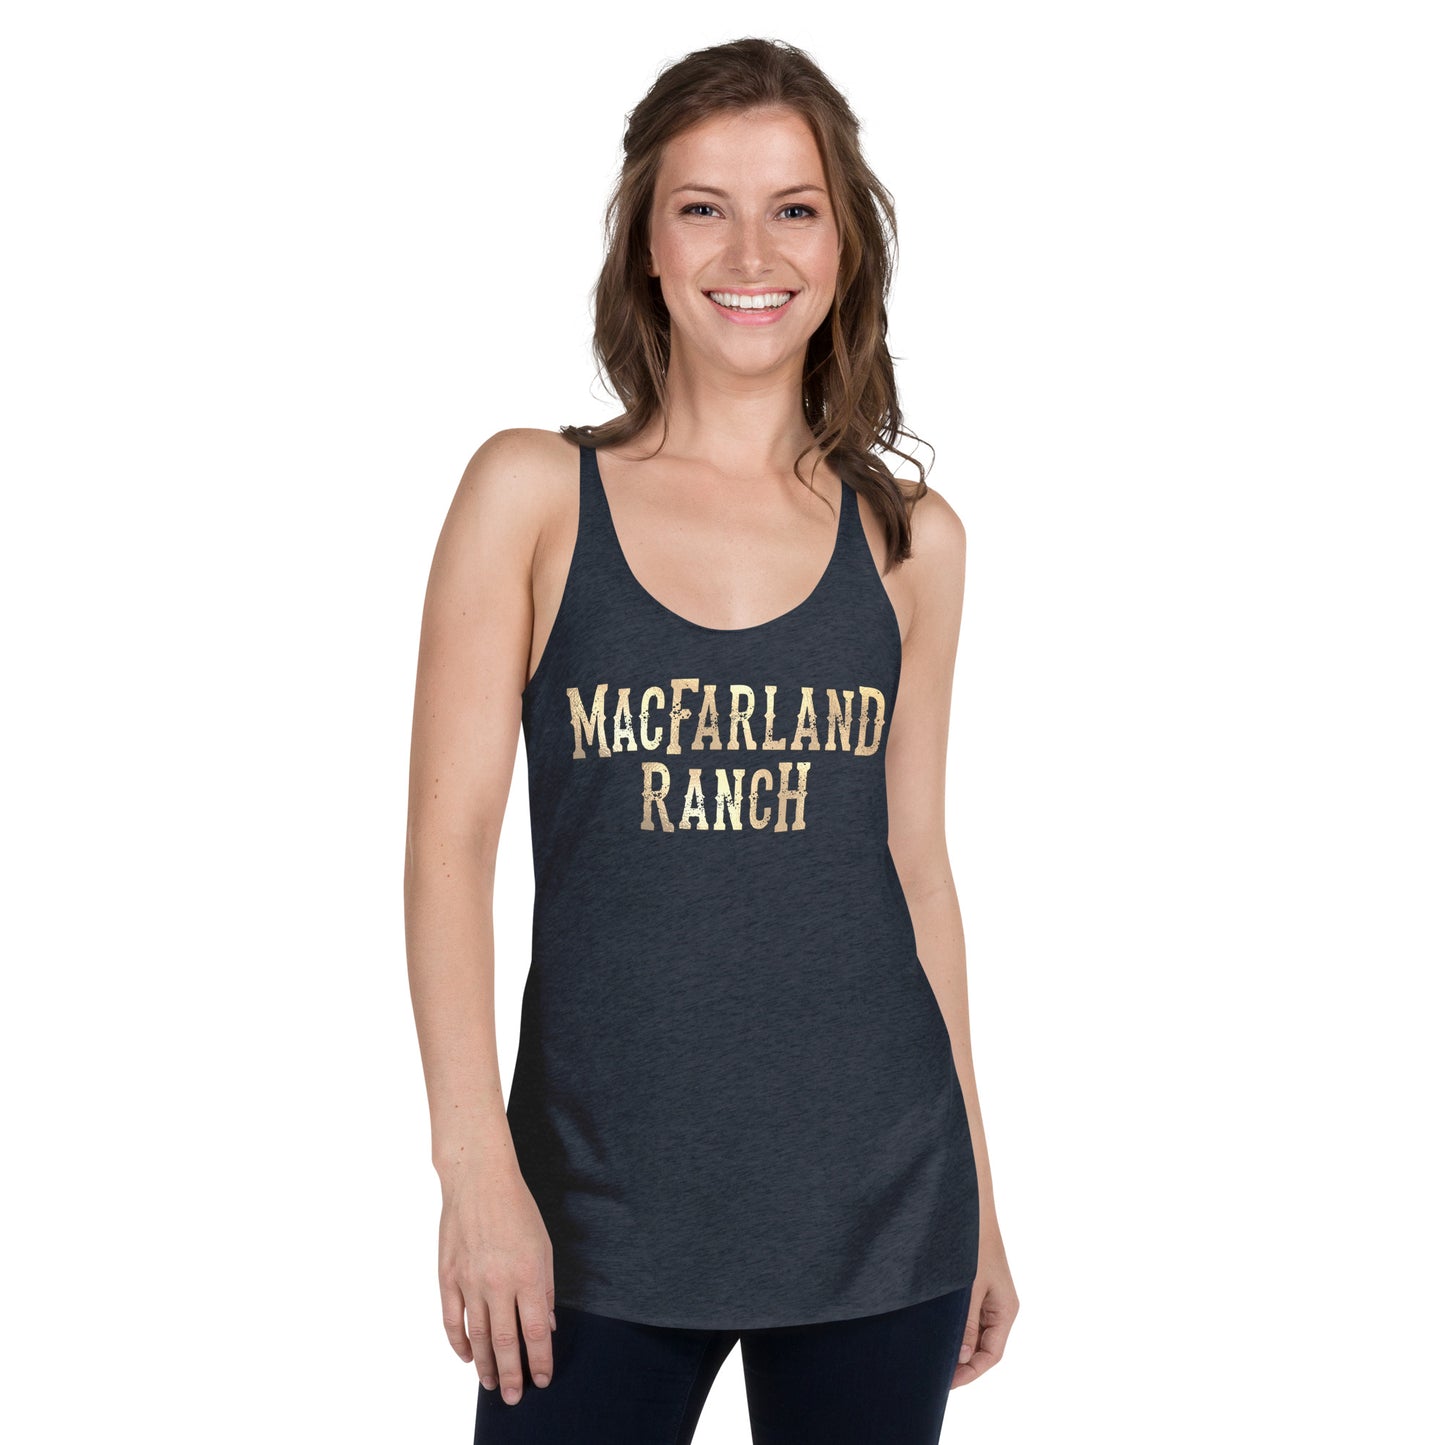 MacFarland Ranch Women's Racerback Tank